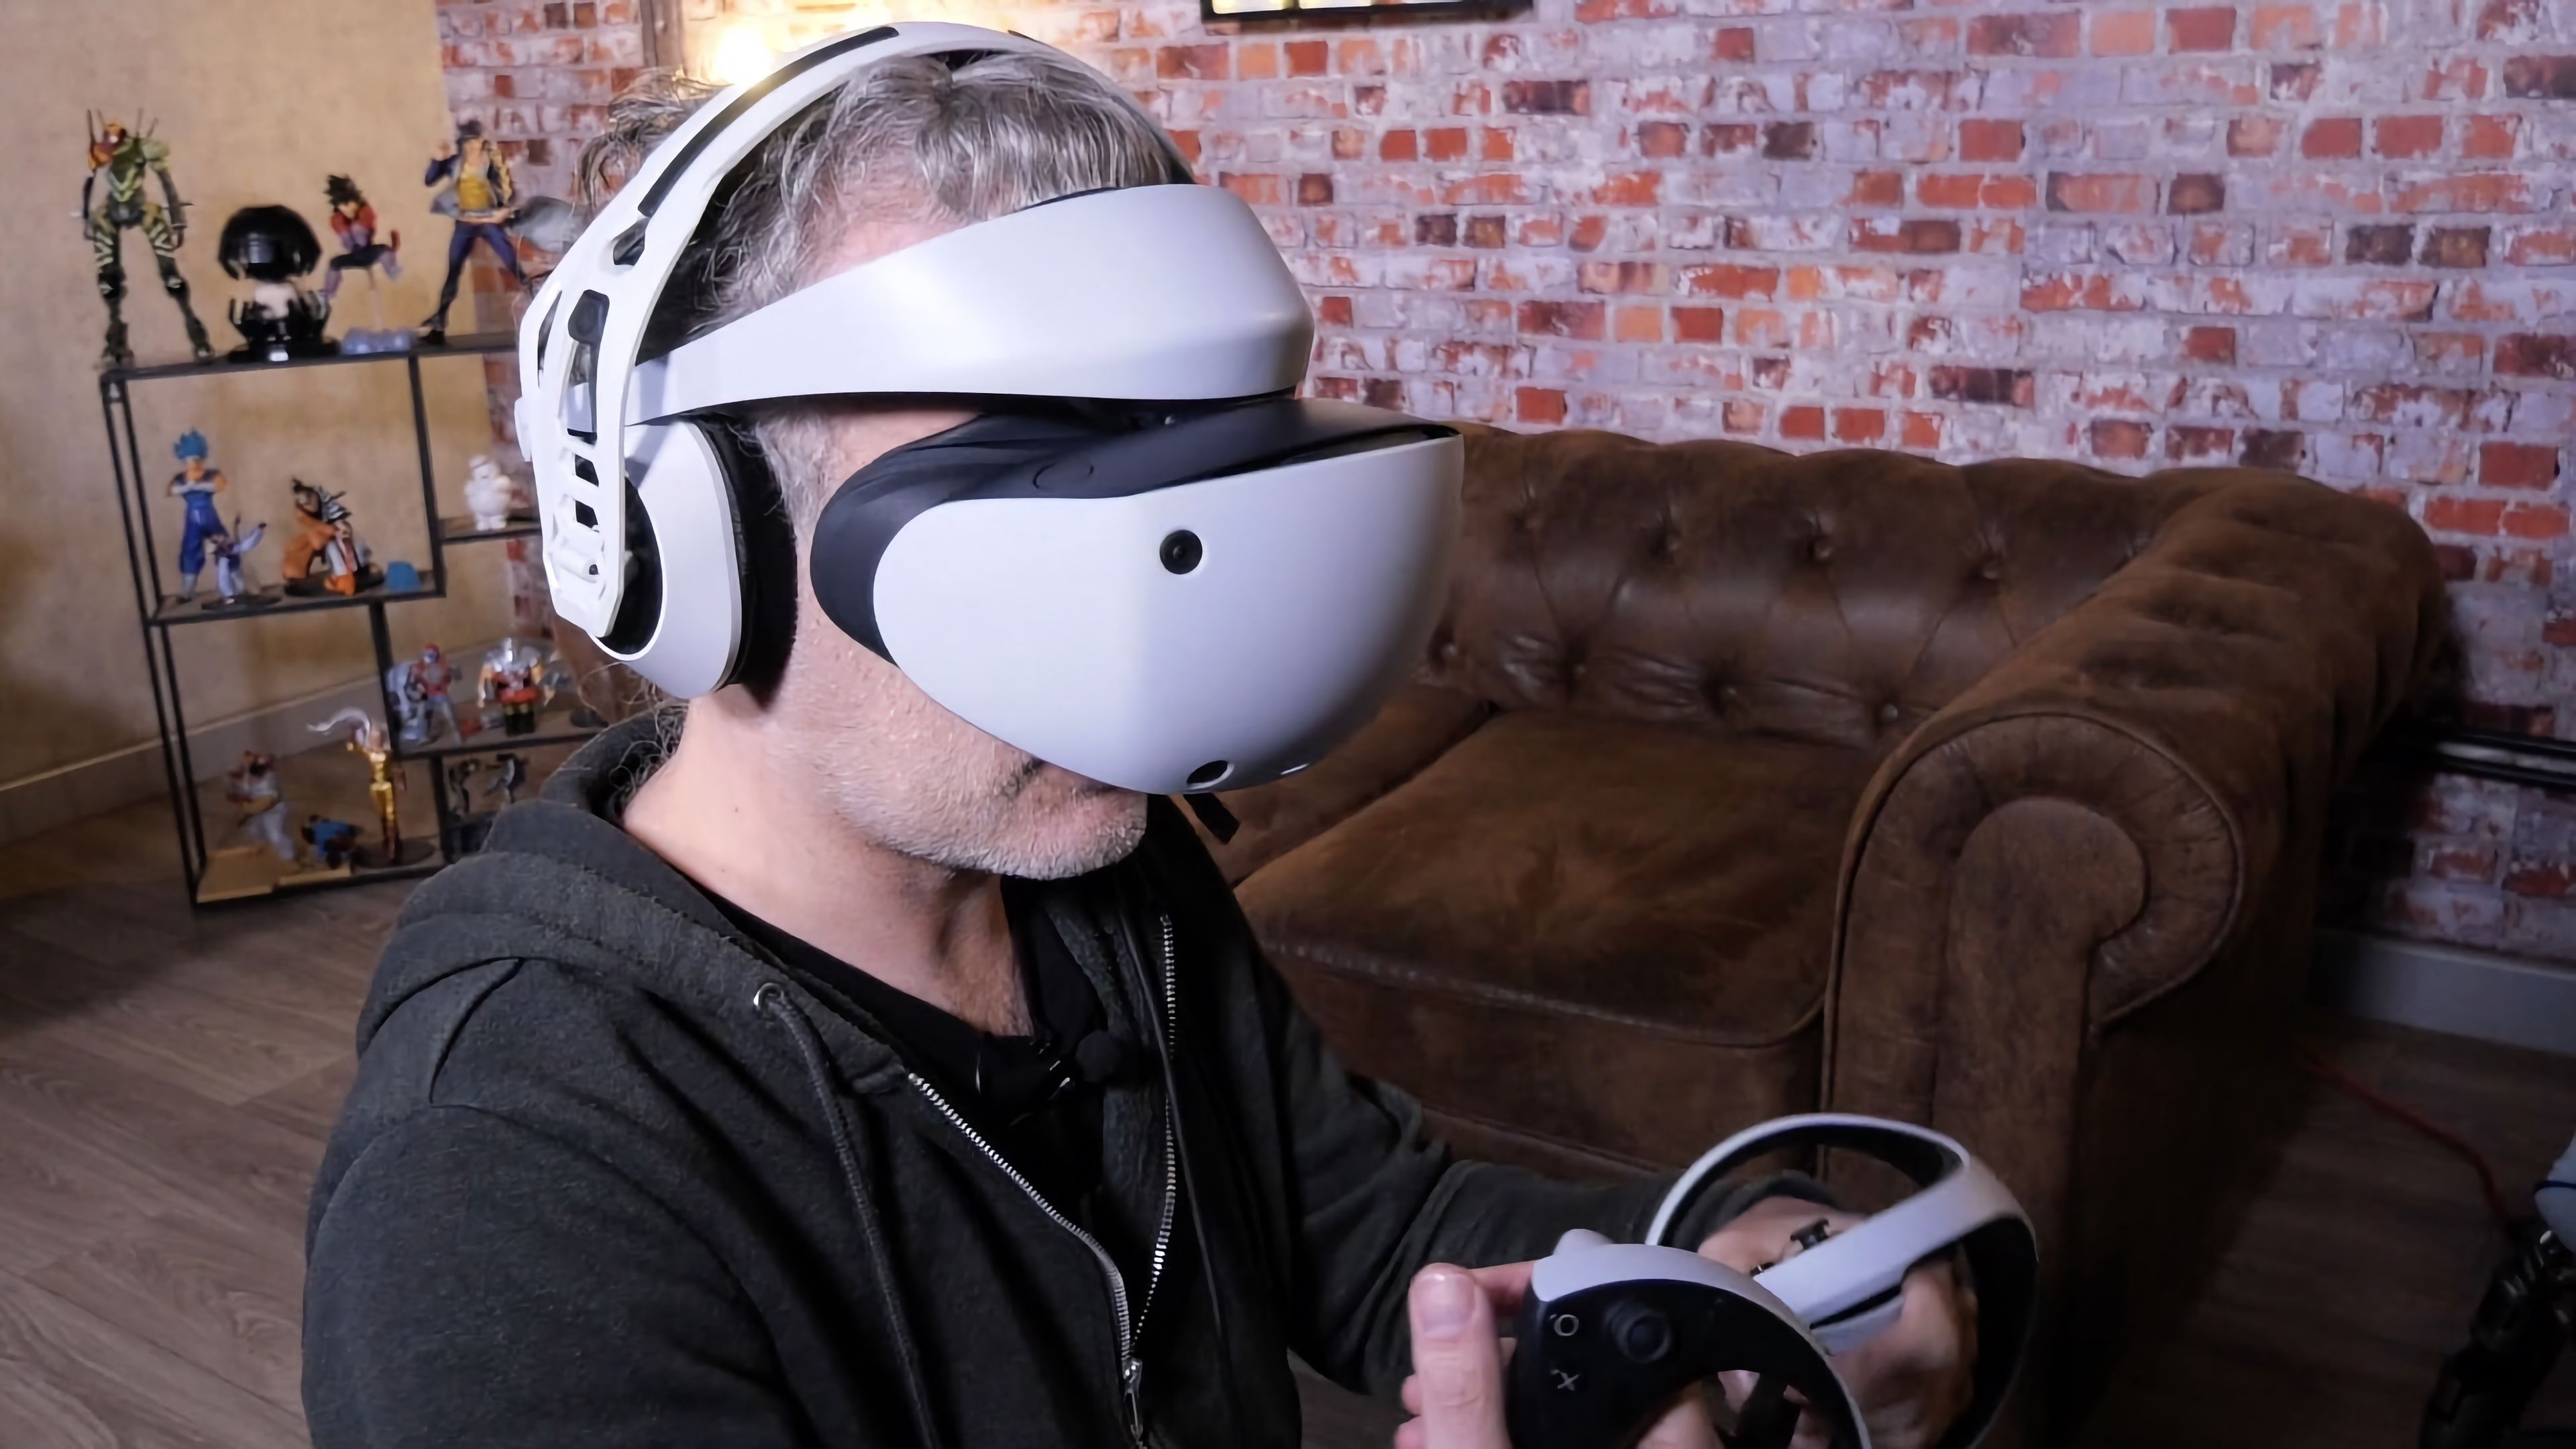 Análisis de PS VR2, el visor de realidad virtual de PS5